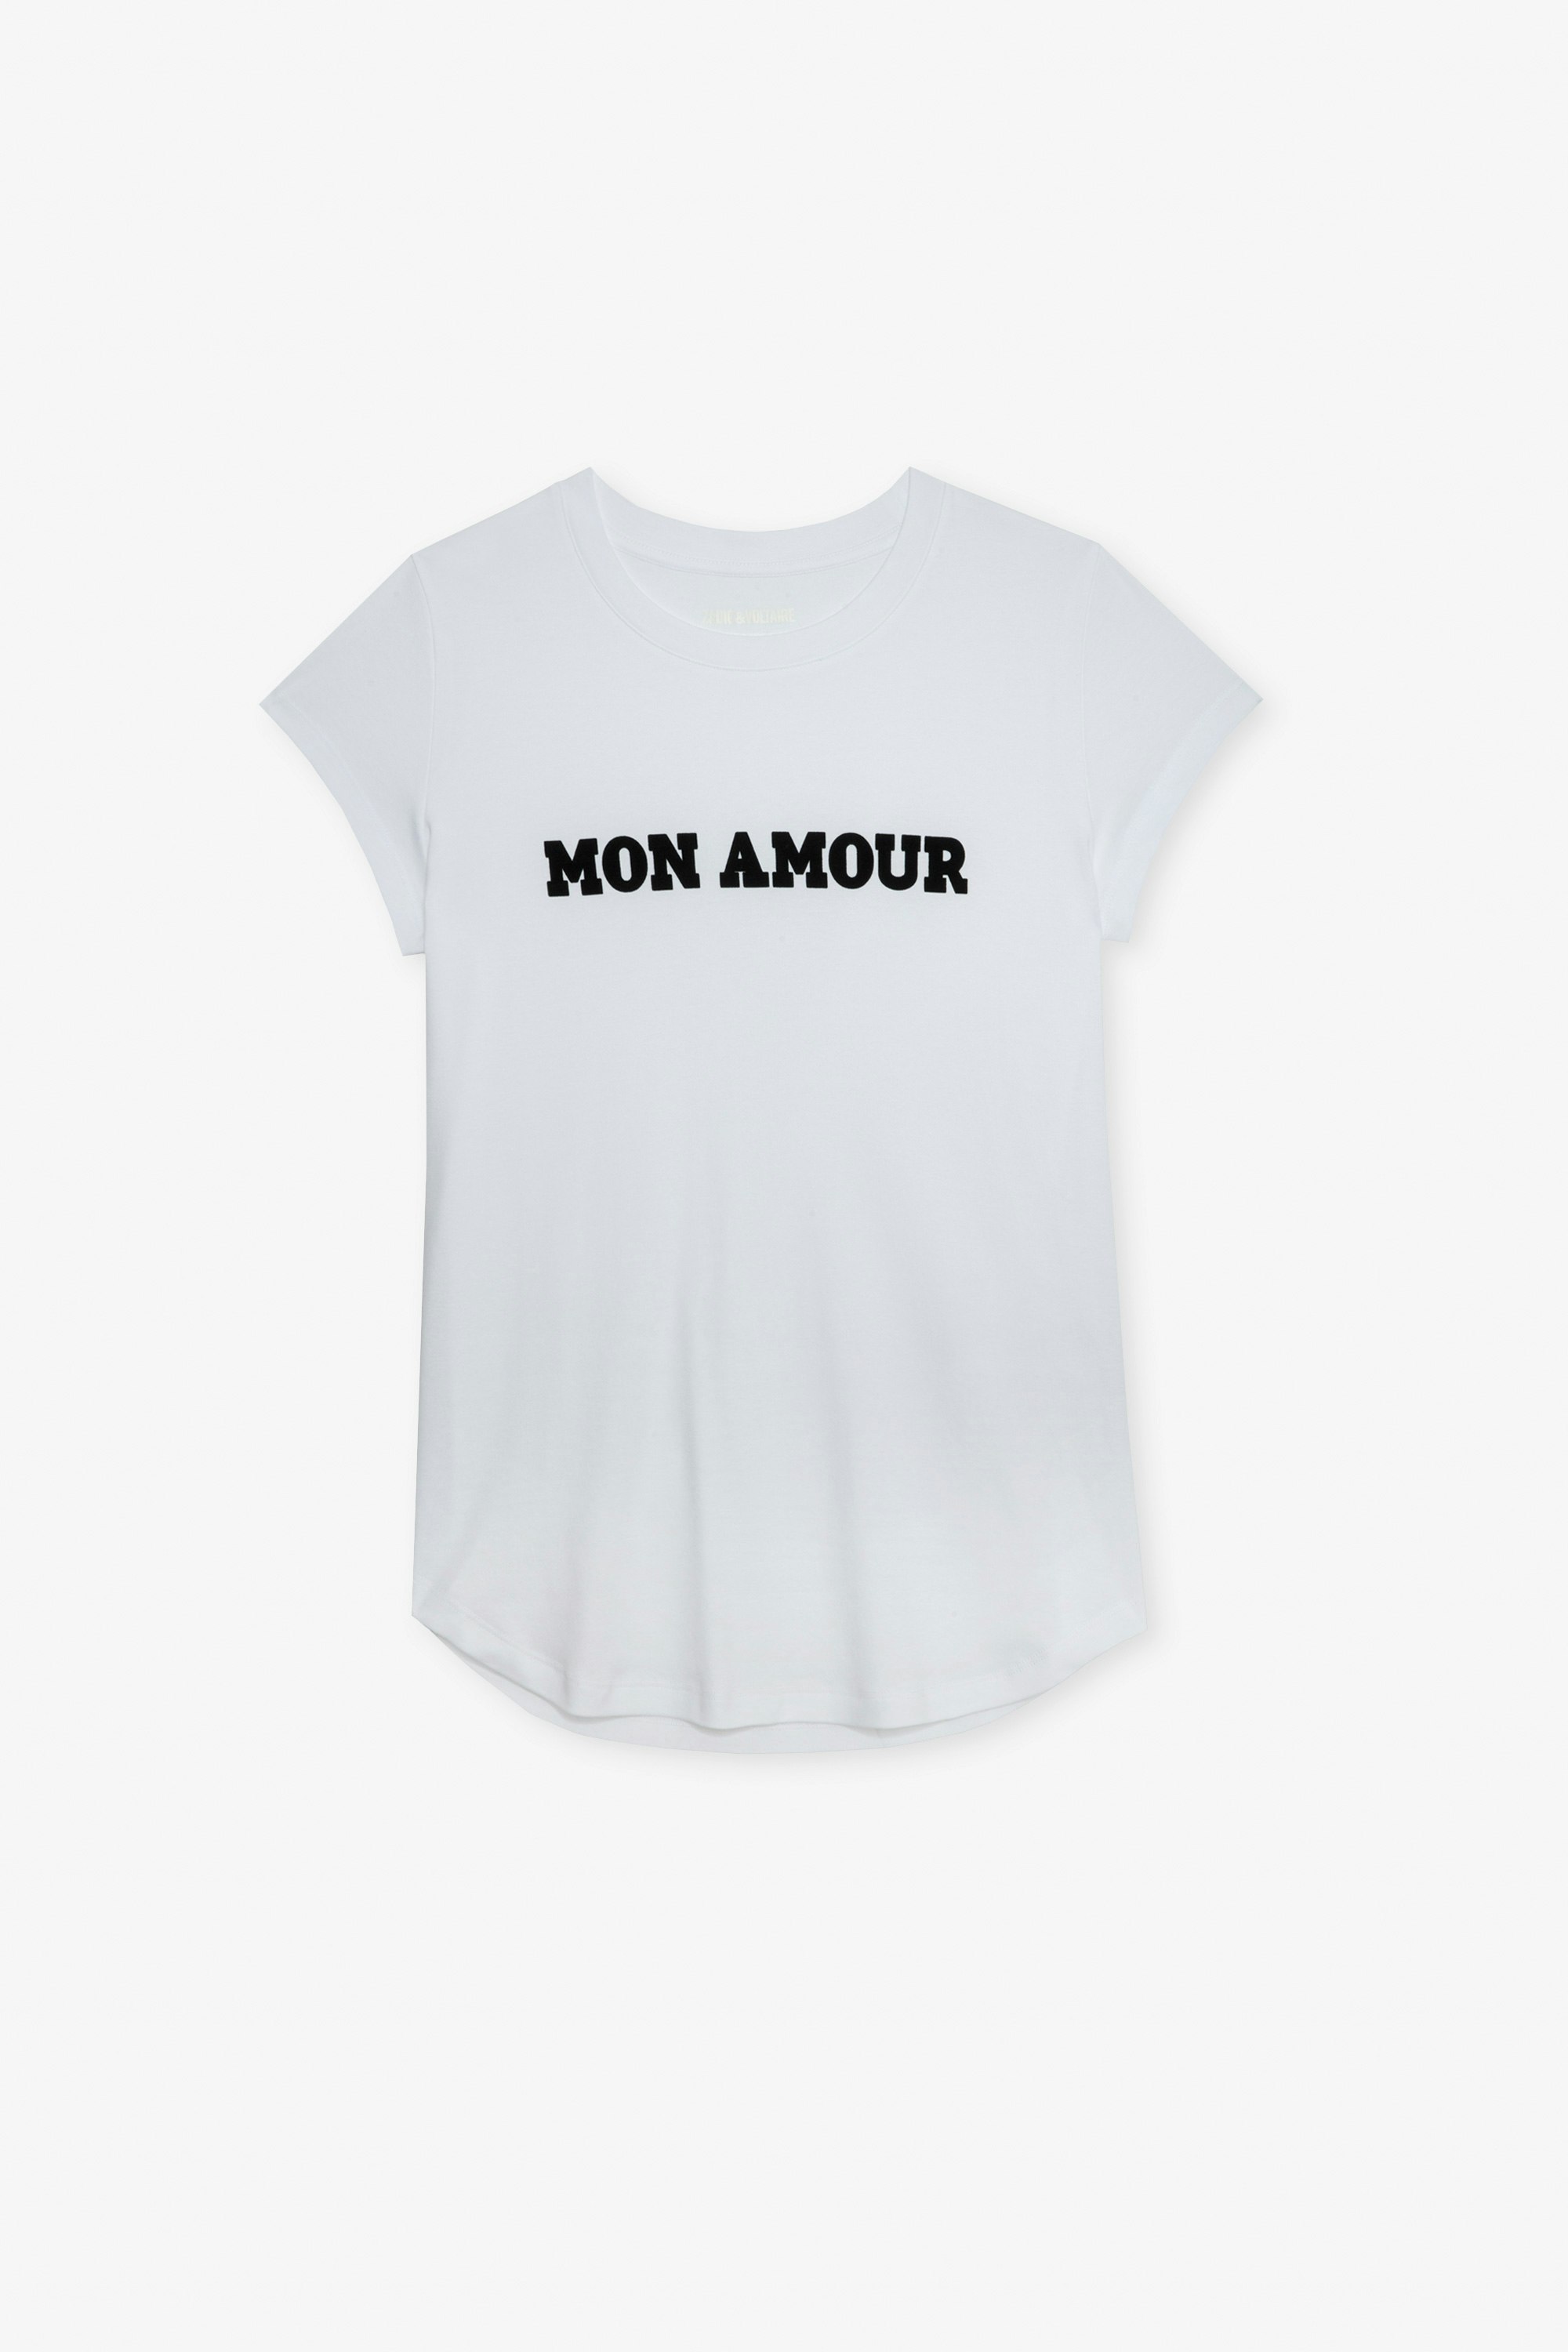 T-shirt Woop Mon Amour T-shirt da donna in cotone bianco con scritta "Mon amour".